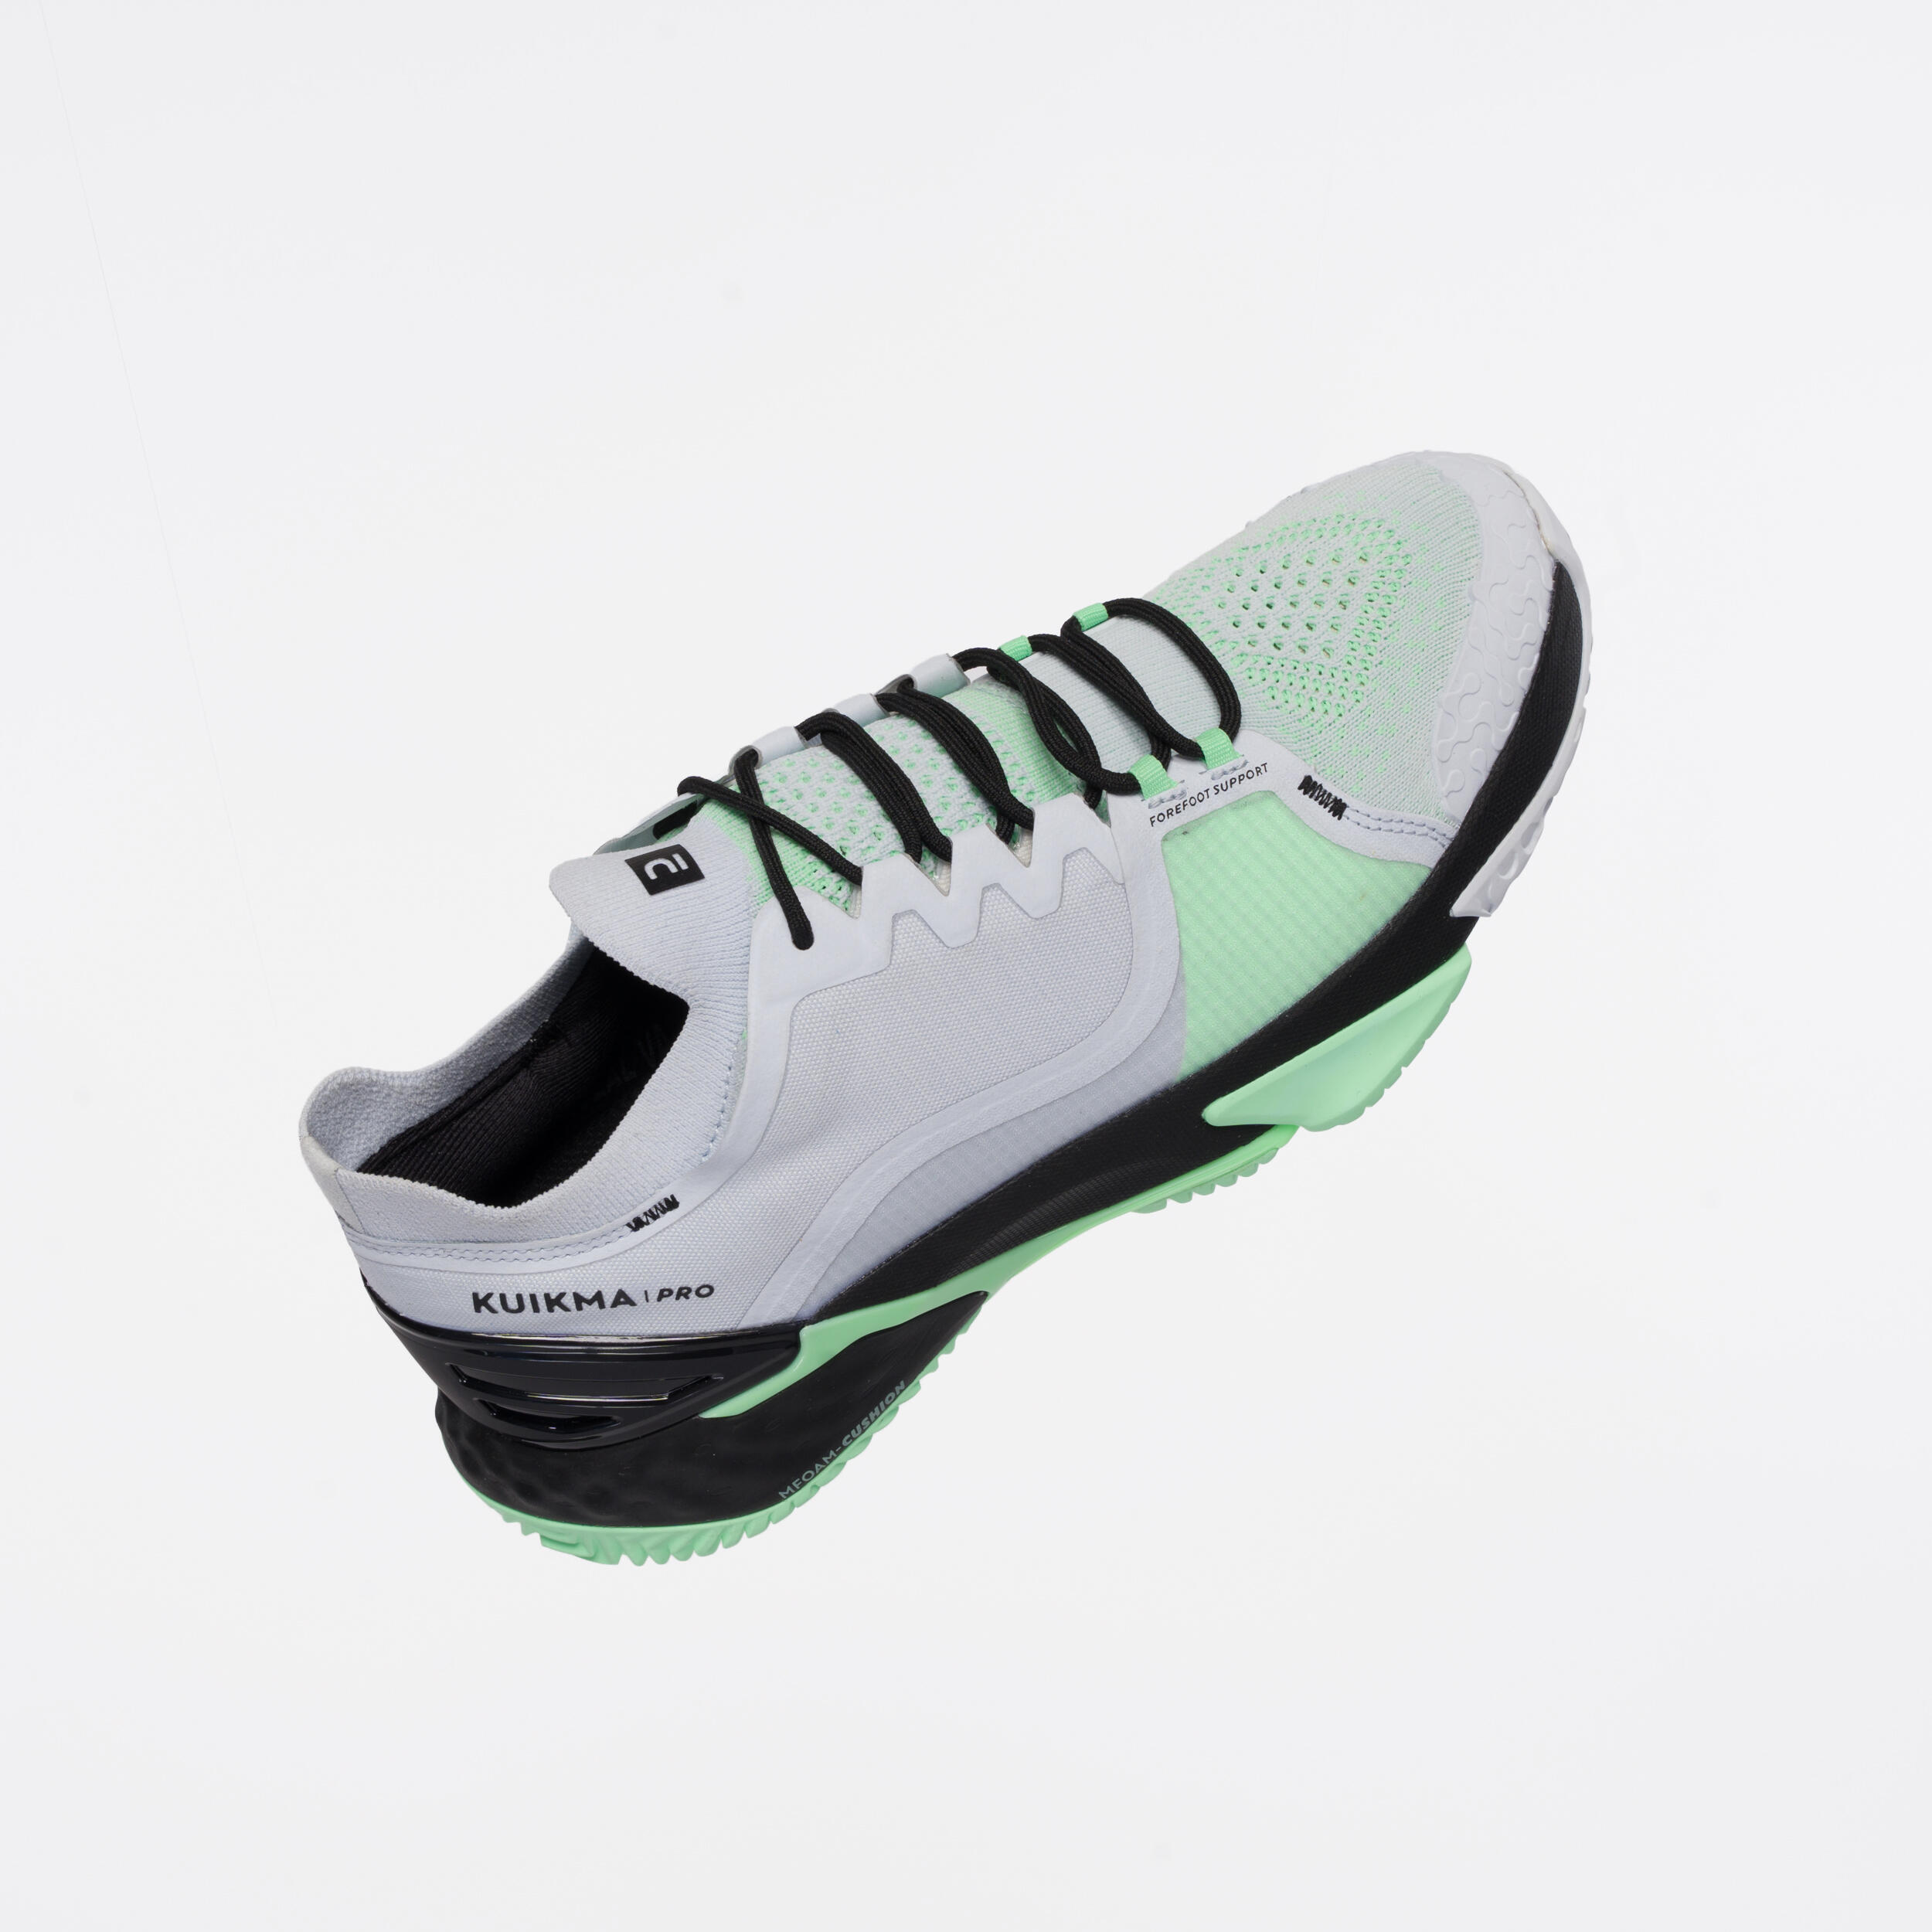 Padel Shoes PS Pro - Grey/Green 10/14